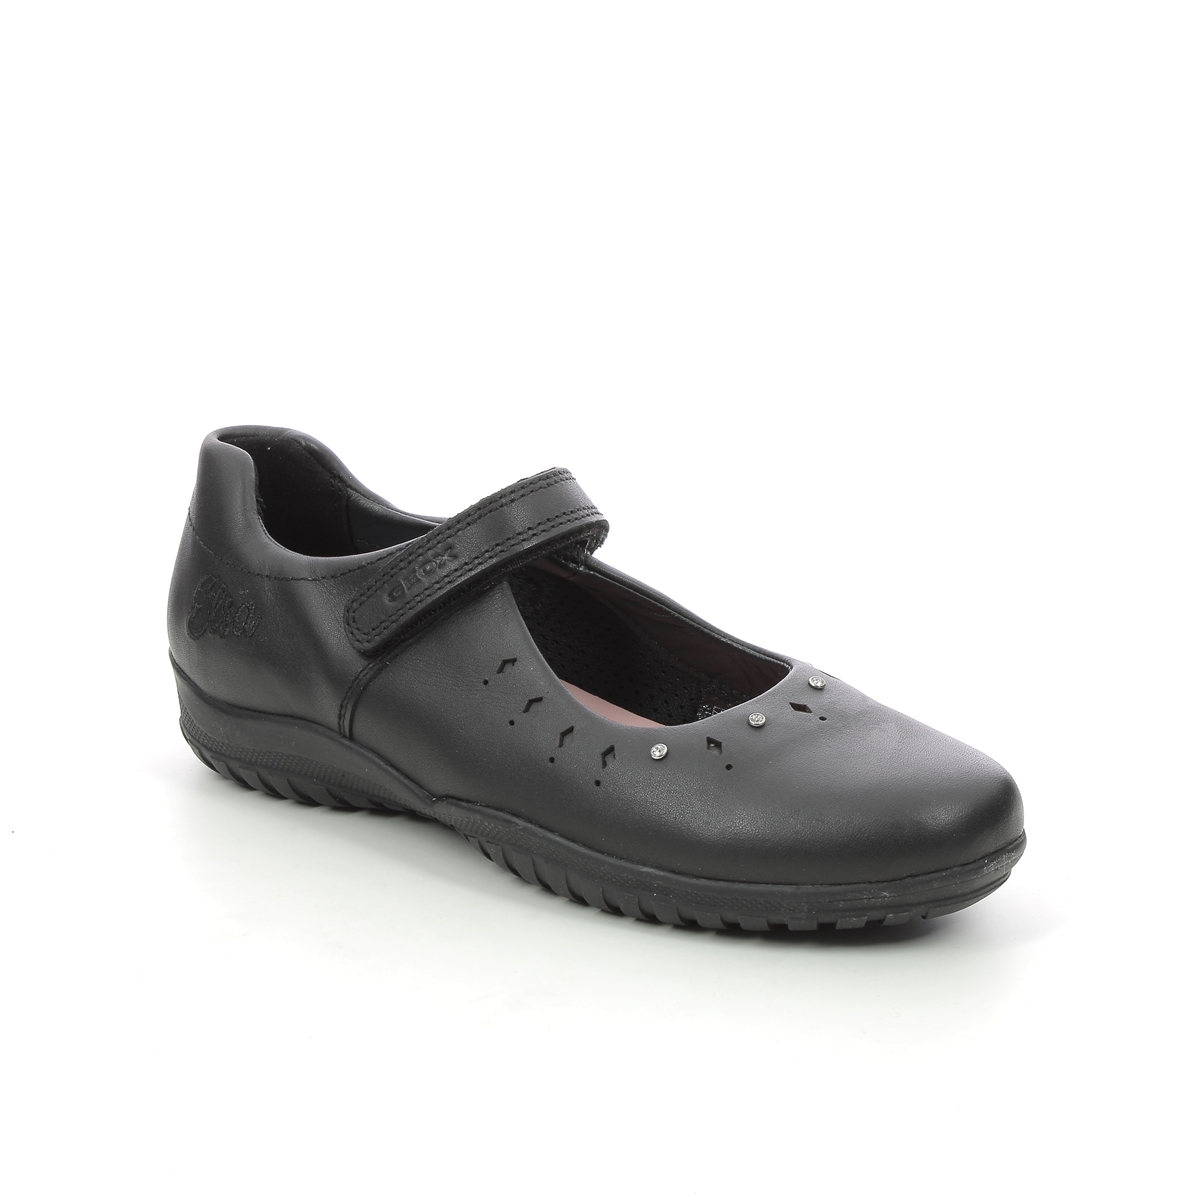 Geox Shadow B Frozen Black leather Kids girls school shoes J16A6B-C9999 in a Plain Leather in Size 35